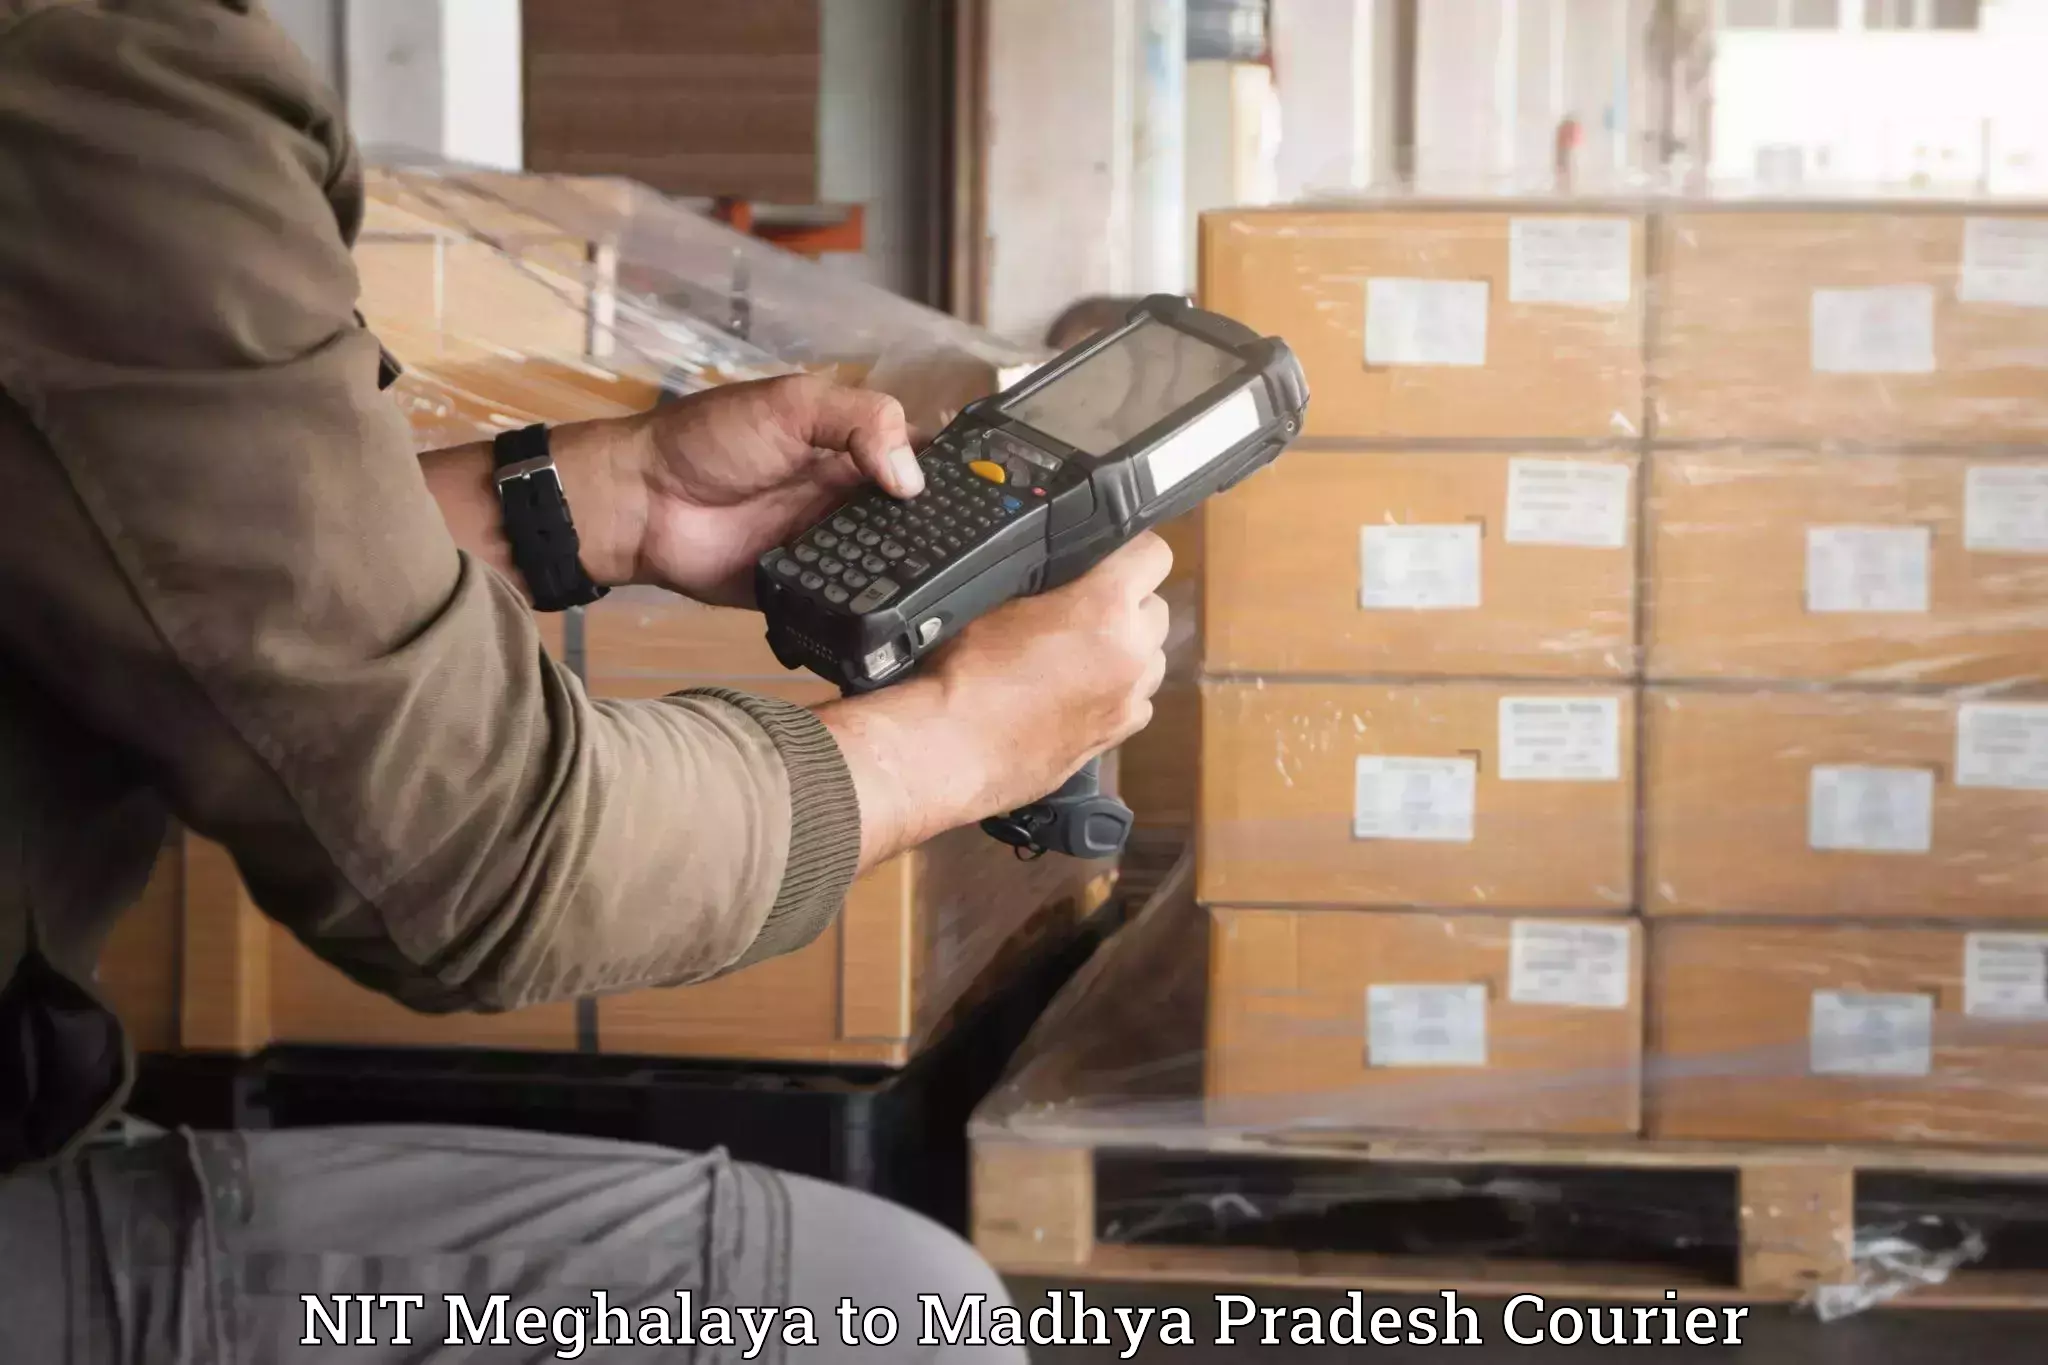 Quality moving company NIT Meghalaya to Ujjain